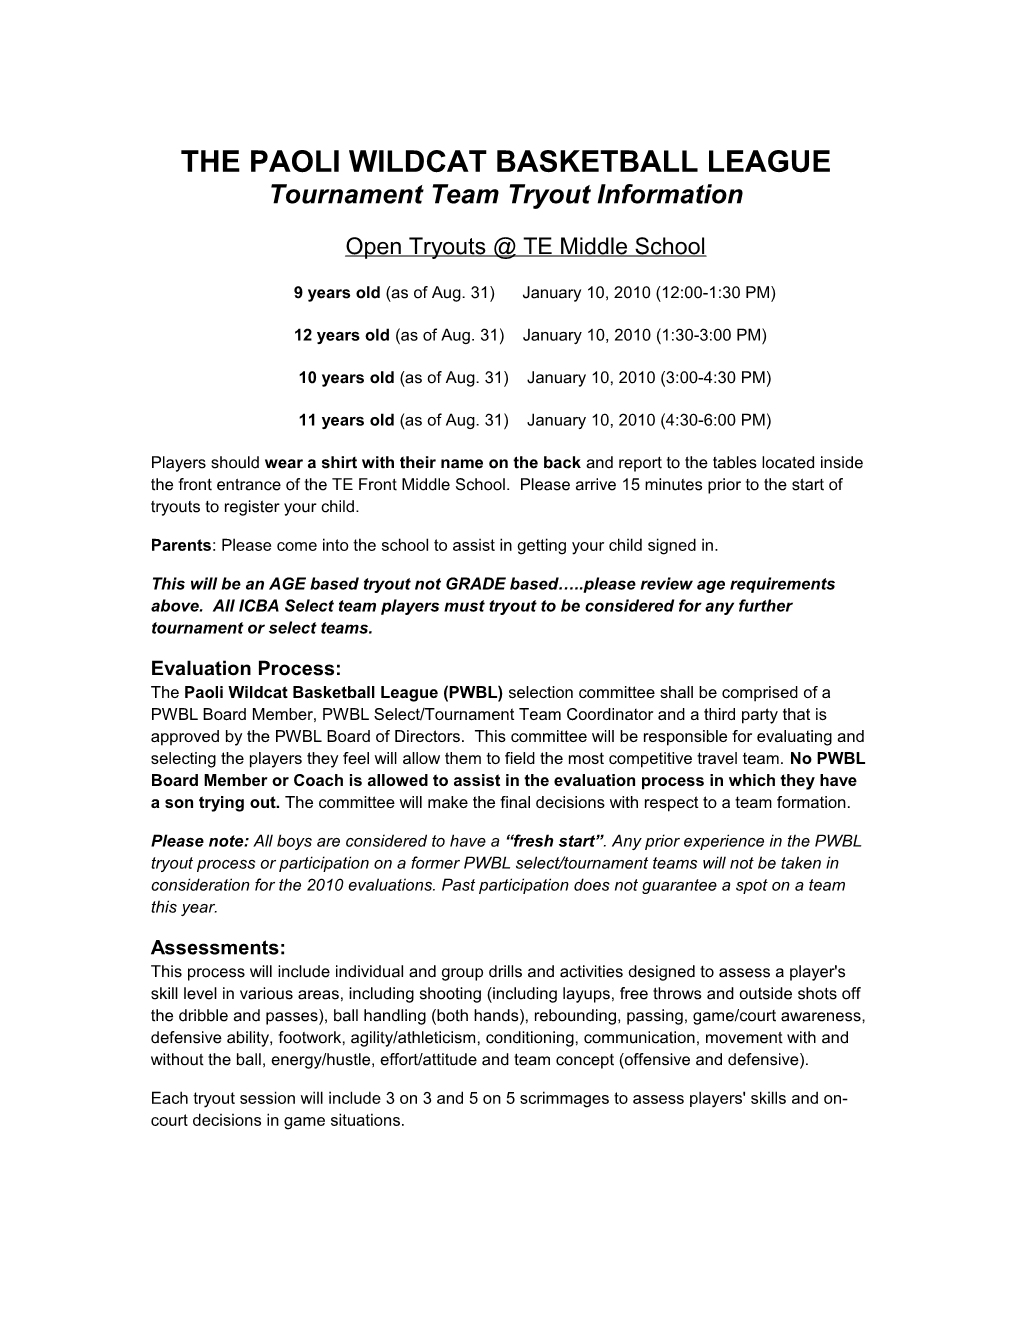 The Paoli Wildcat Basketball League